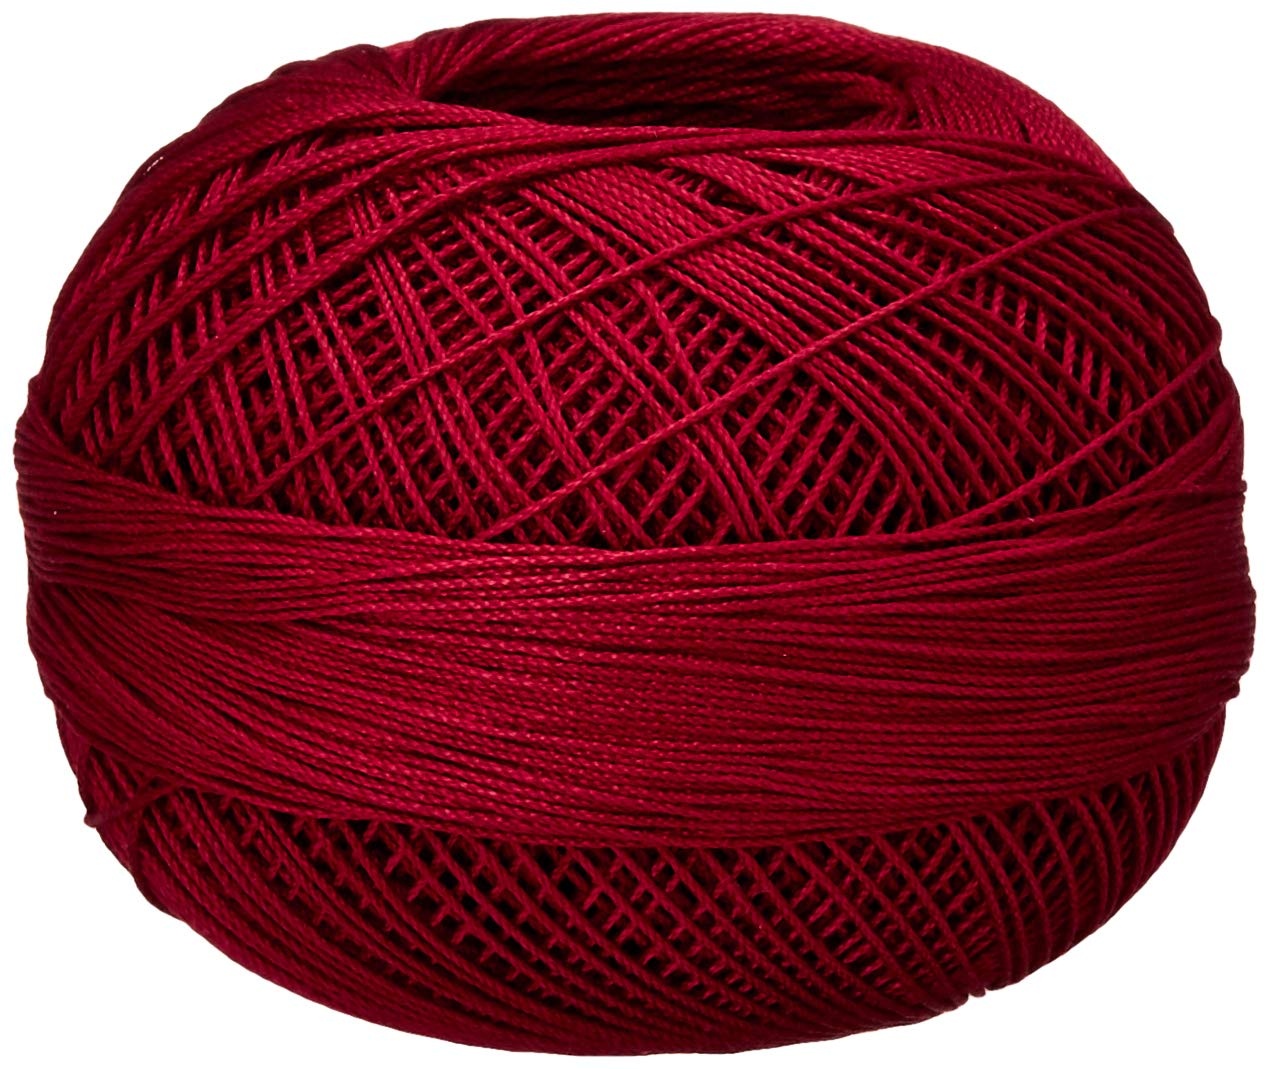 Handy Hands Lizbeth Cordonnet Cotton Size 10-Victorian Red - image 1 of 2